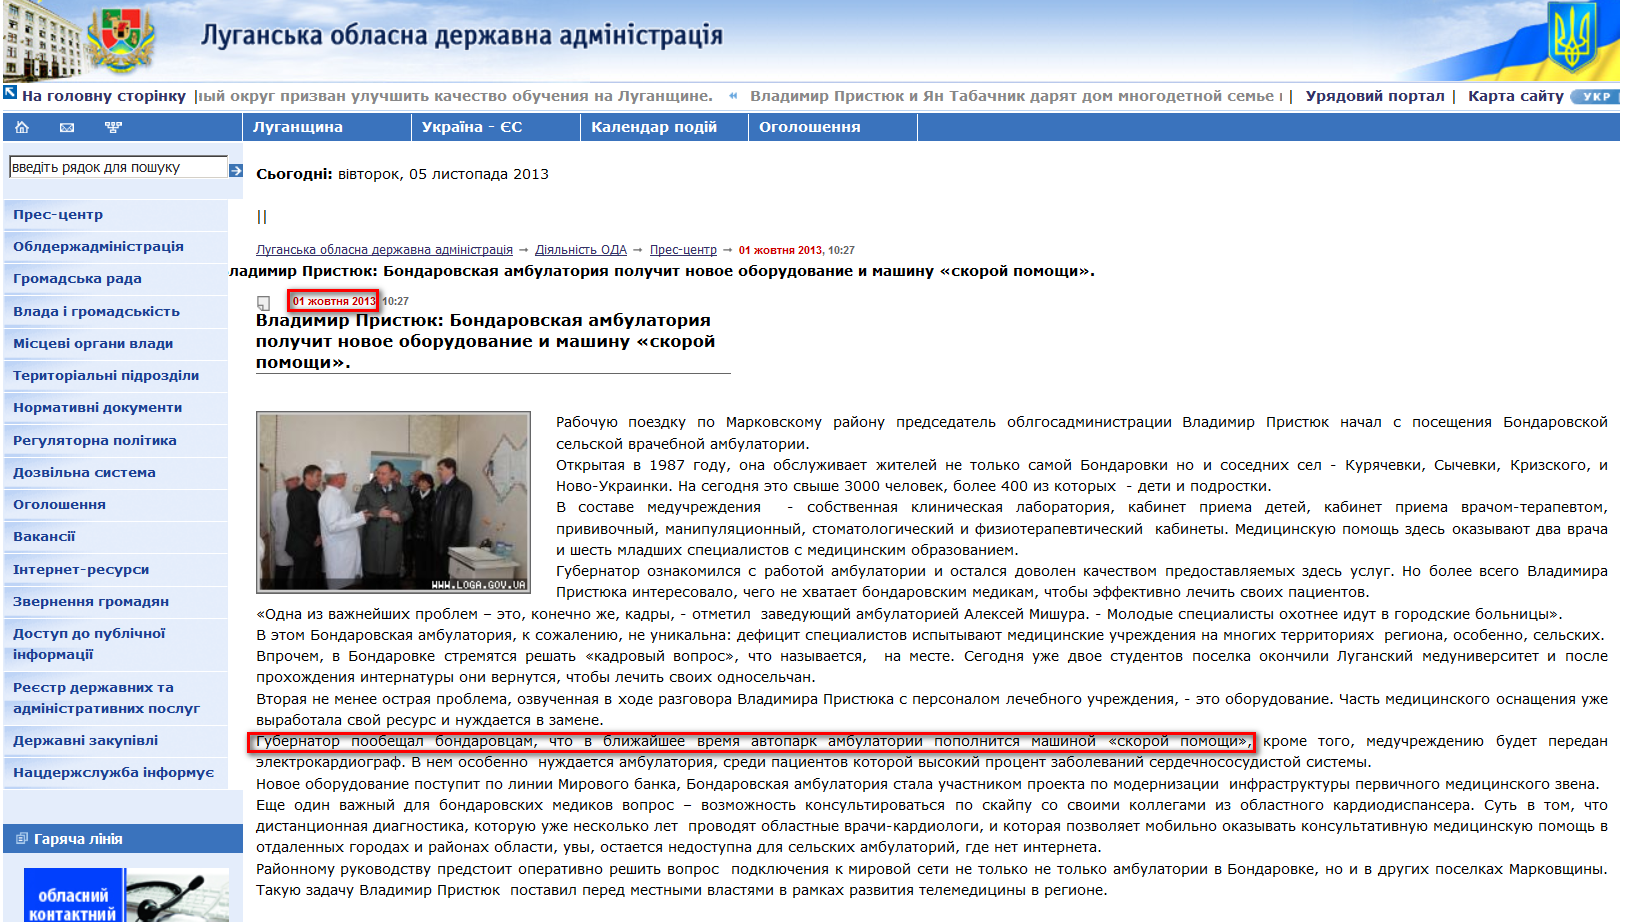 http://www.loga.gov.ua/oda/press/news/2013/10/01/news_57504.html